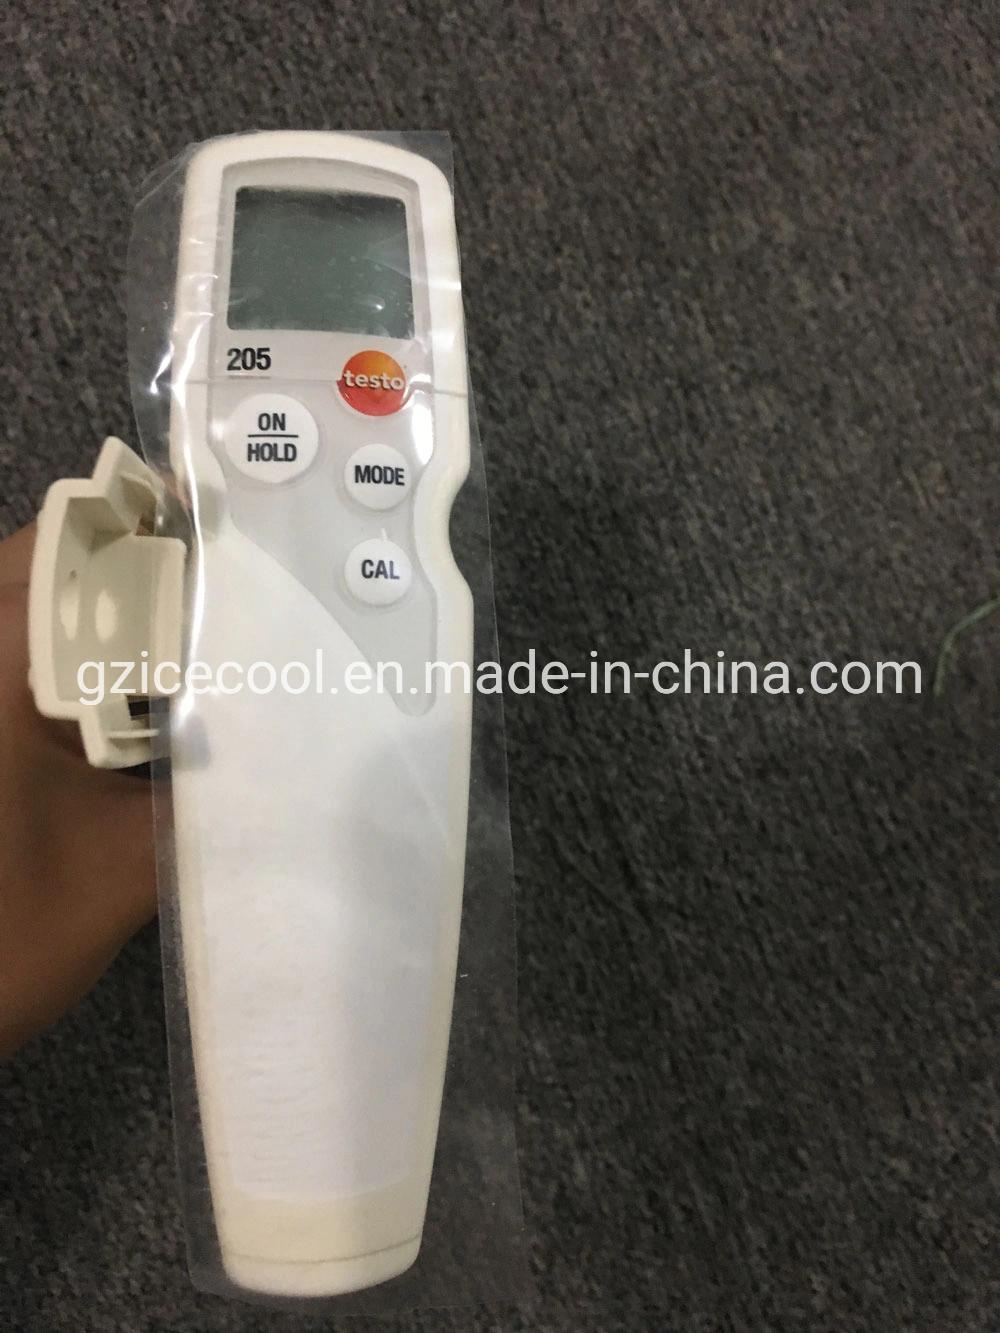 Original Testo 205 pH Value Measuring Instrument Meter No. 0563 2051 for Meat